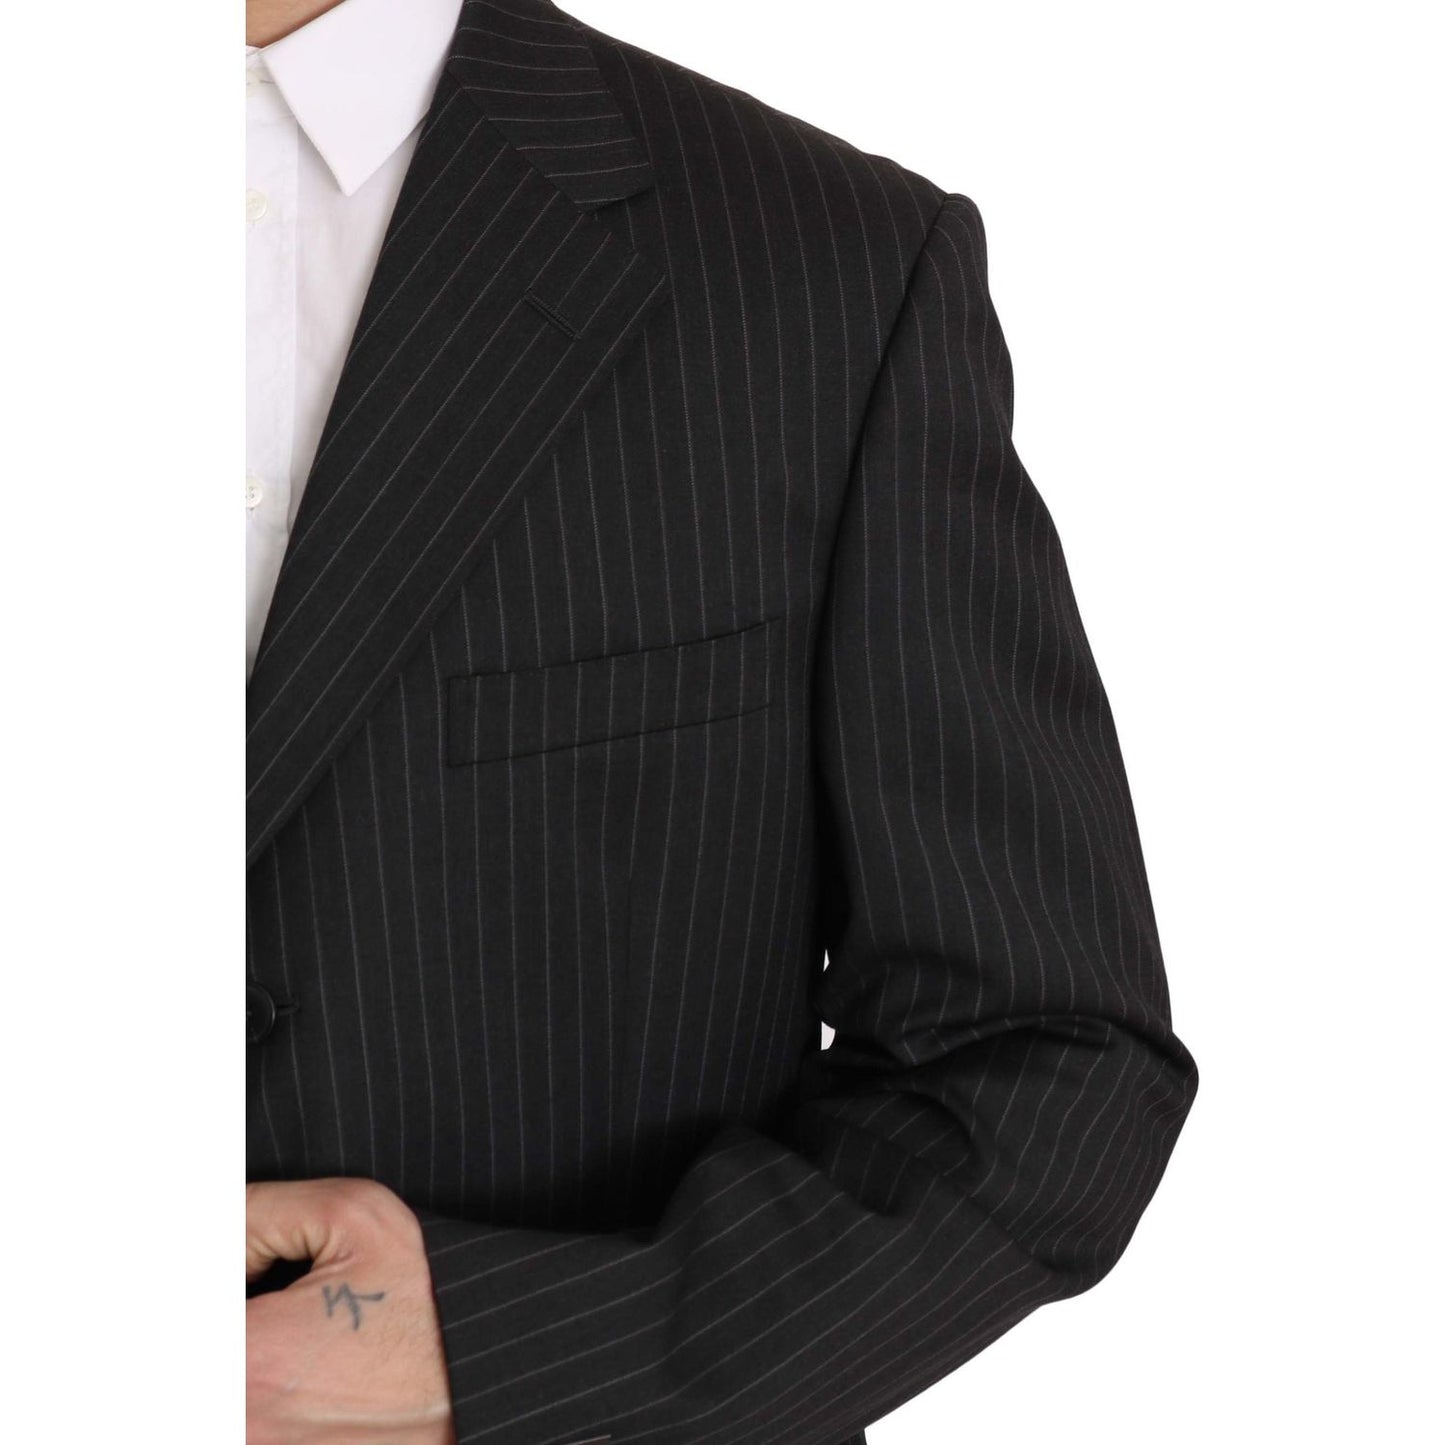 Z ZEGNA Elegant Black Striped Wool Suit Suit black-striped-two-piece-3-button-100-wool-suit IMG_7800-scaled.jpg